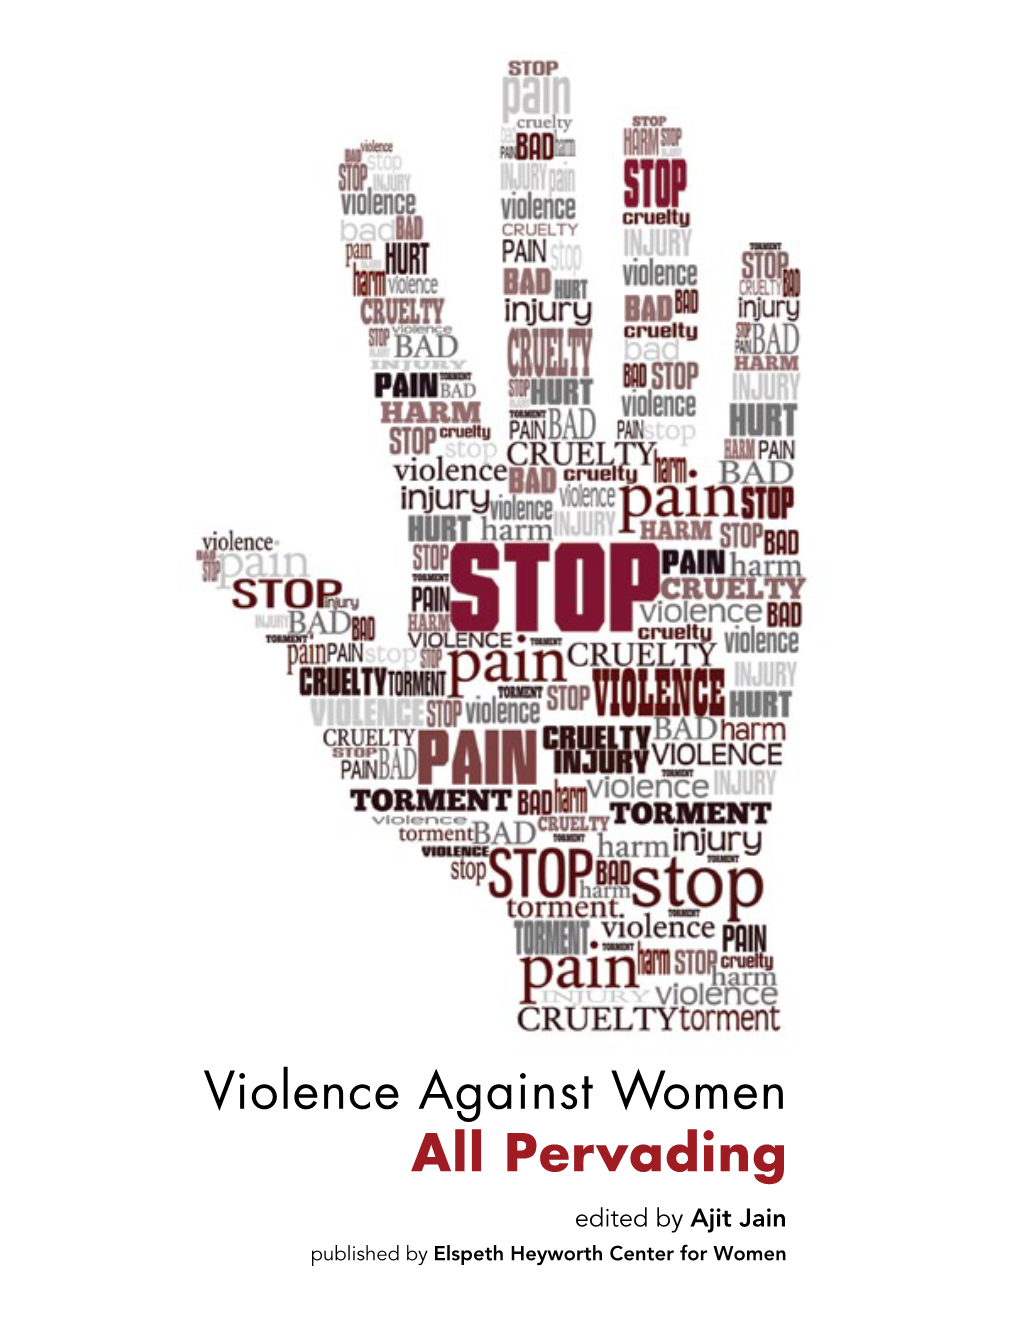 Violence Against Women All Pervading